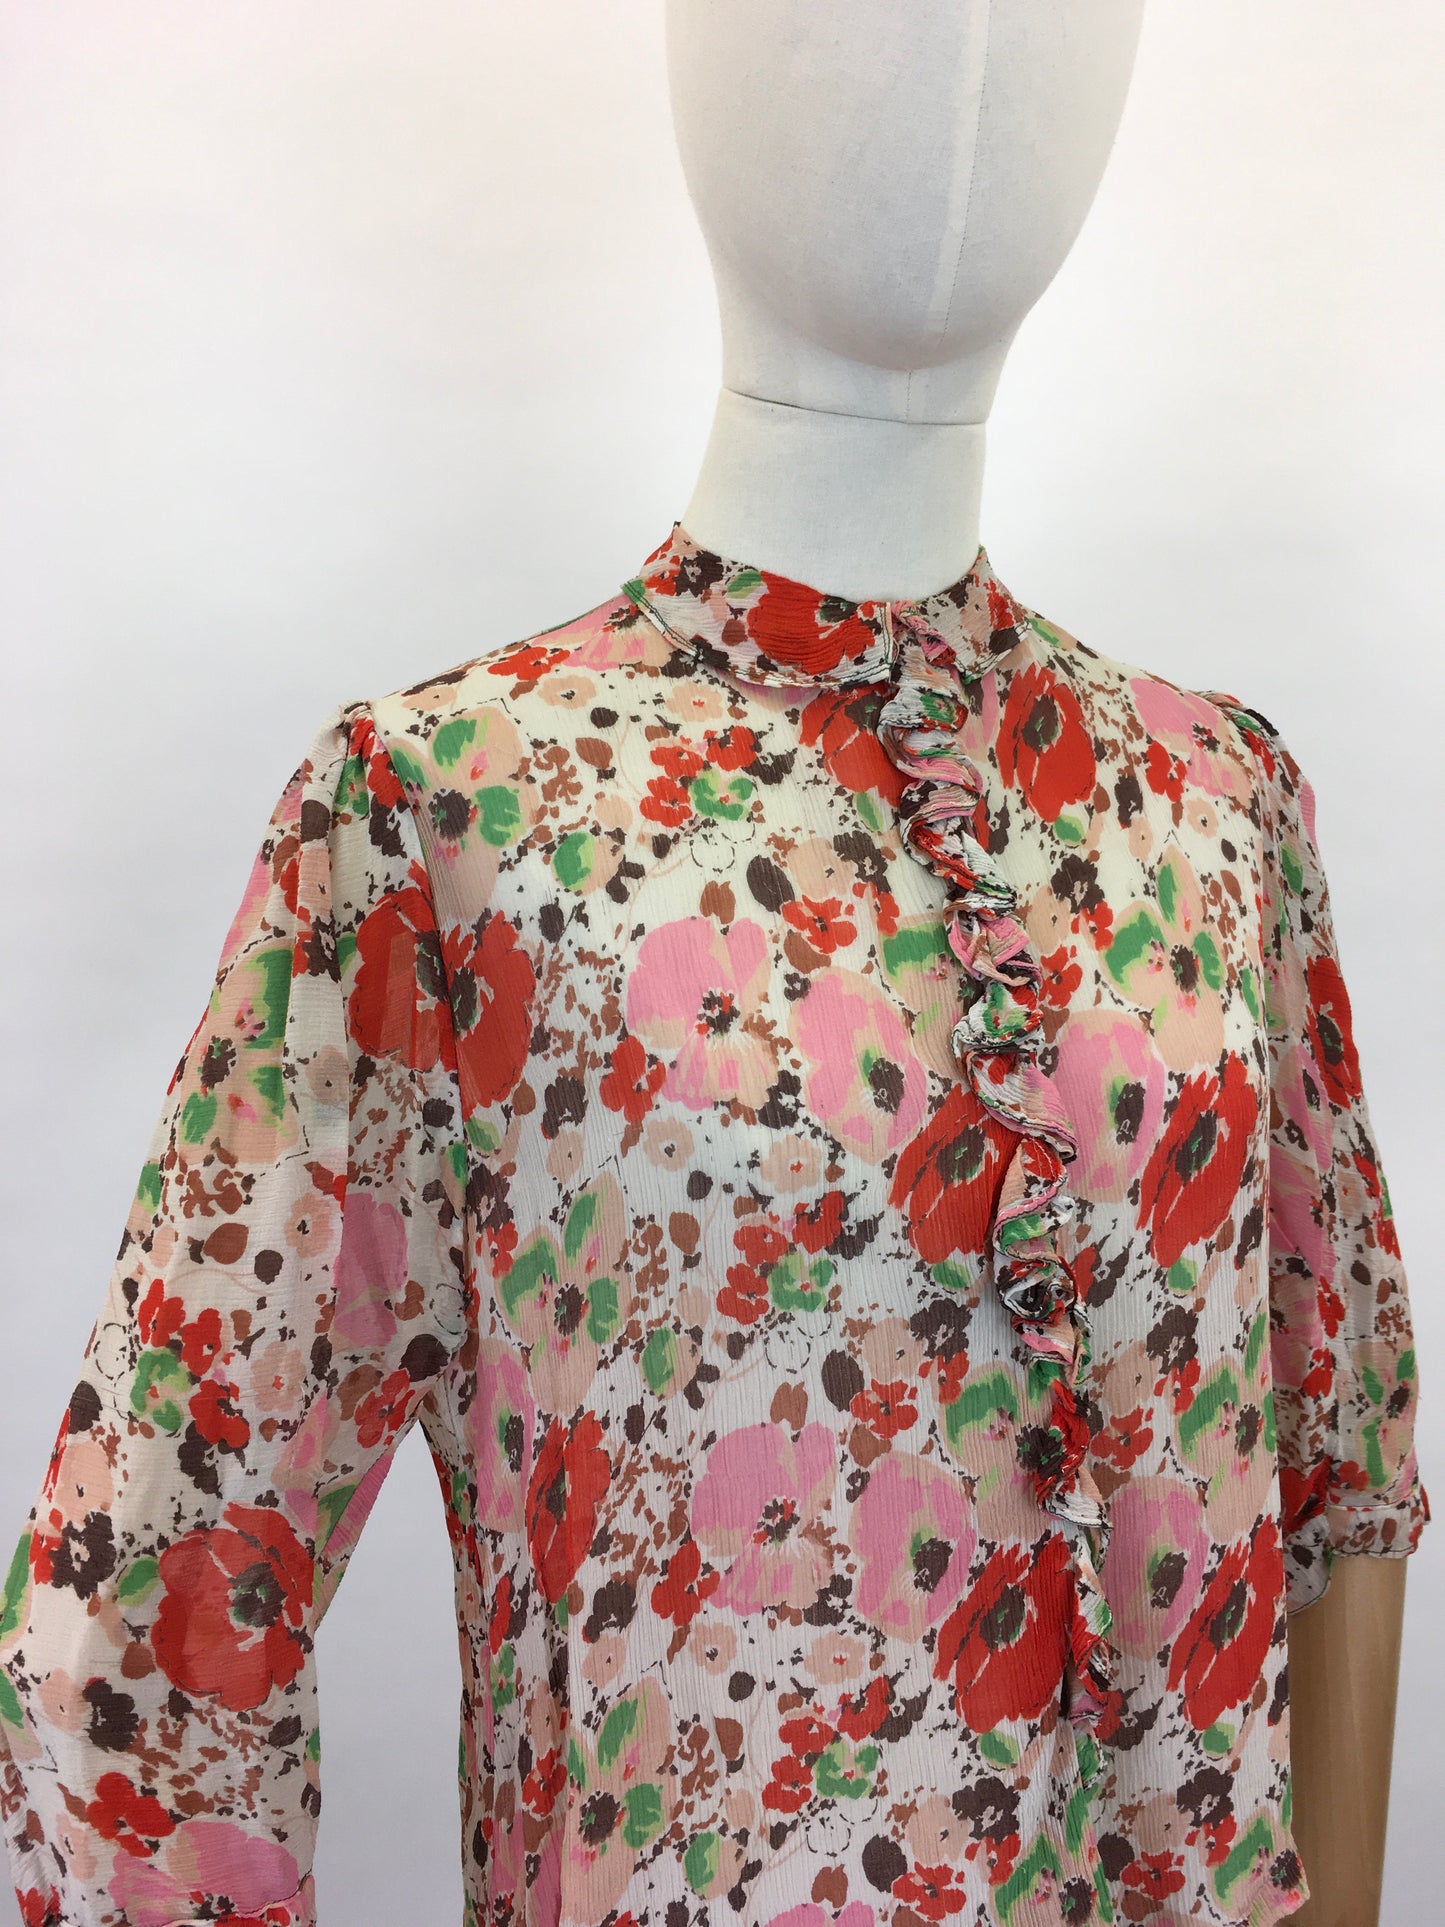 Original 1930s Floral Chiffon Blouse - Exquisite Colour Pallet Of An English Floral Meadow